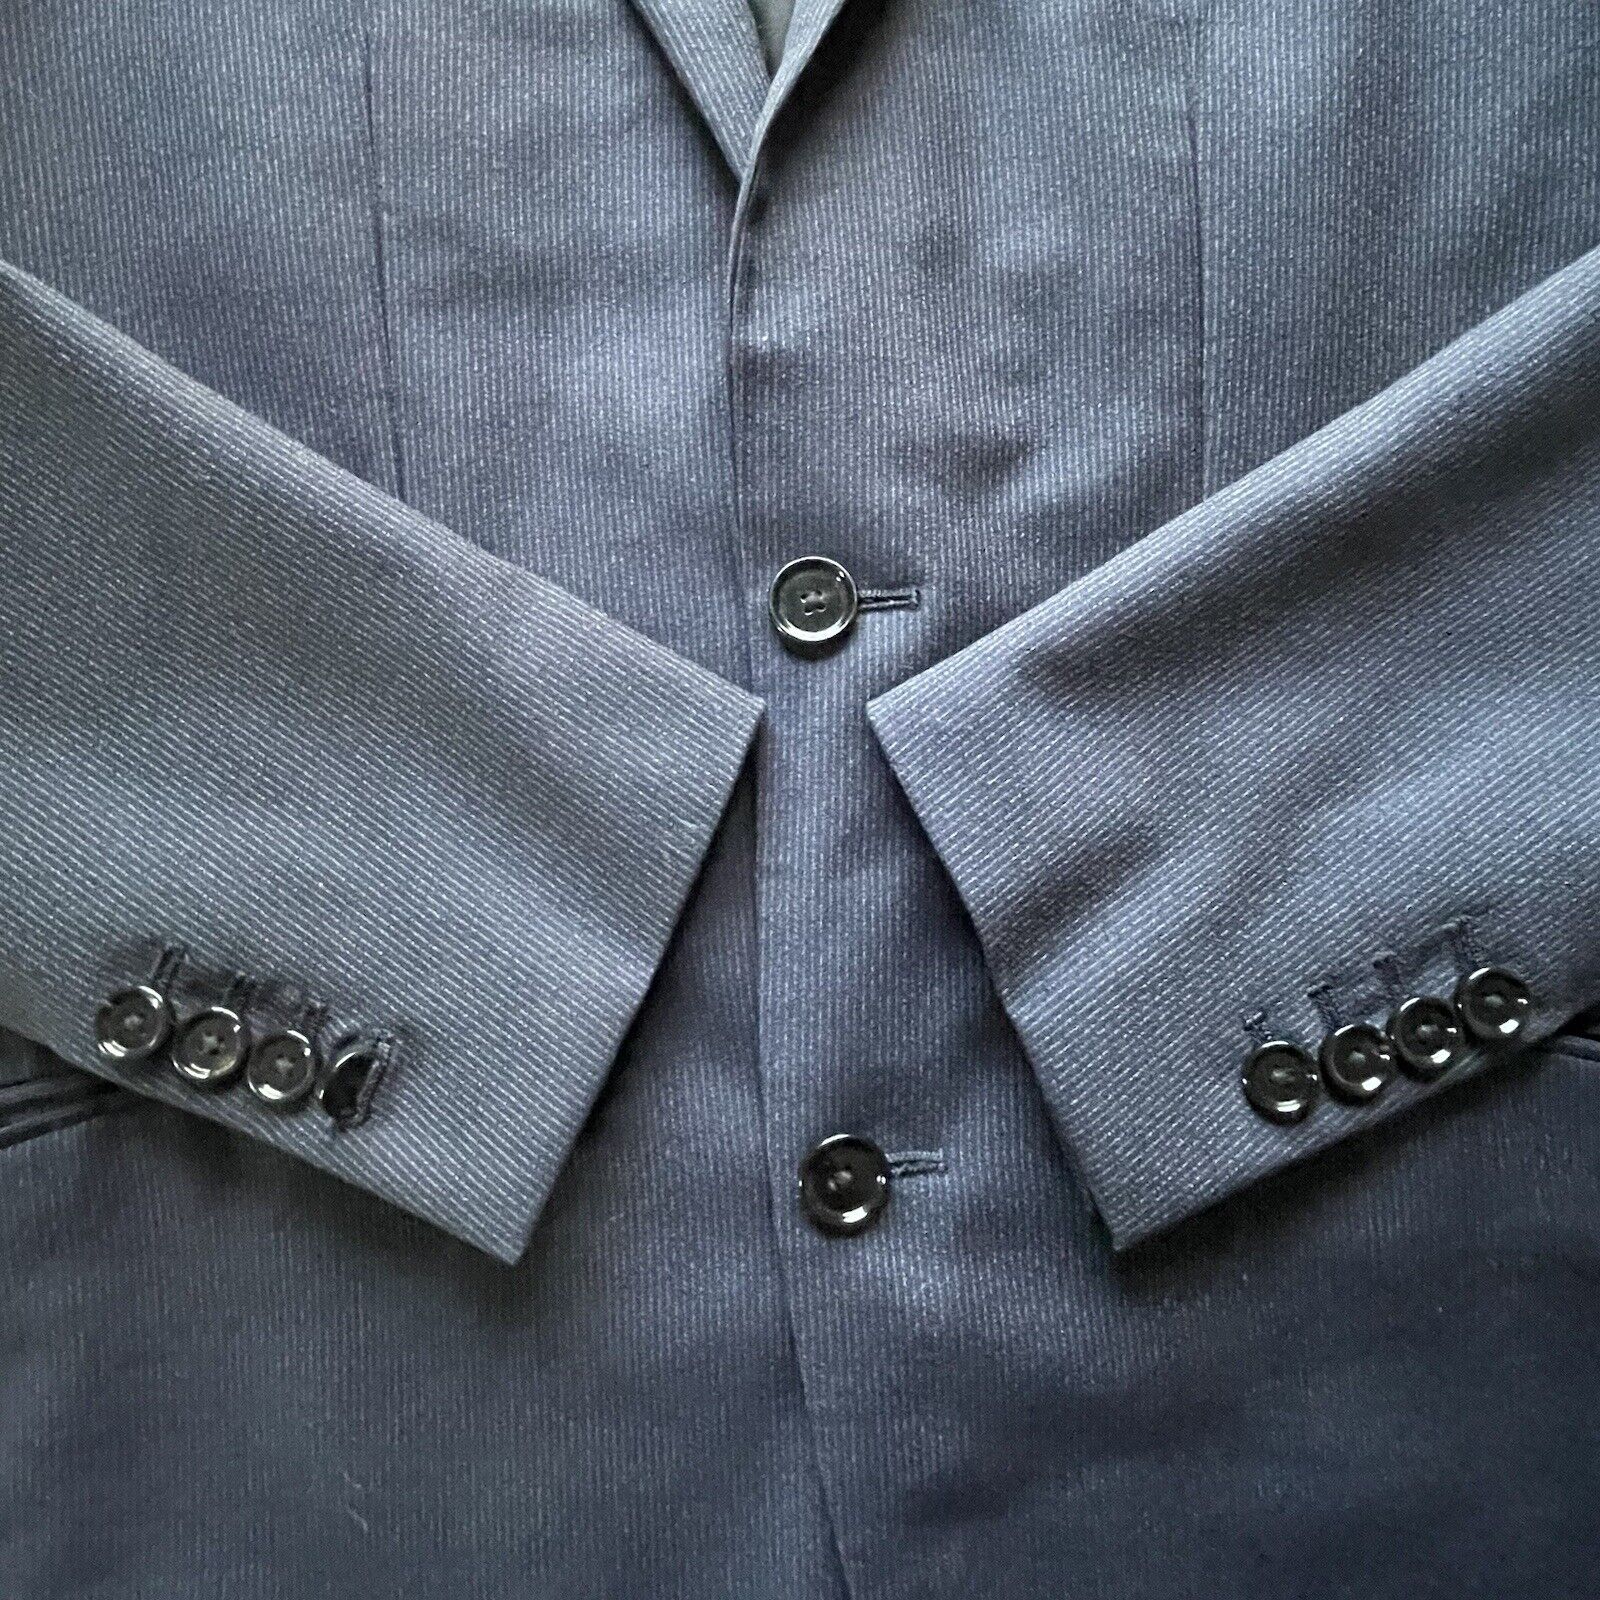 LNWOT Indochino Suit Sport Jacket Polka Dot Lined… - image 4